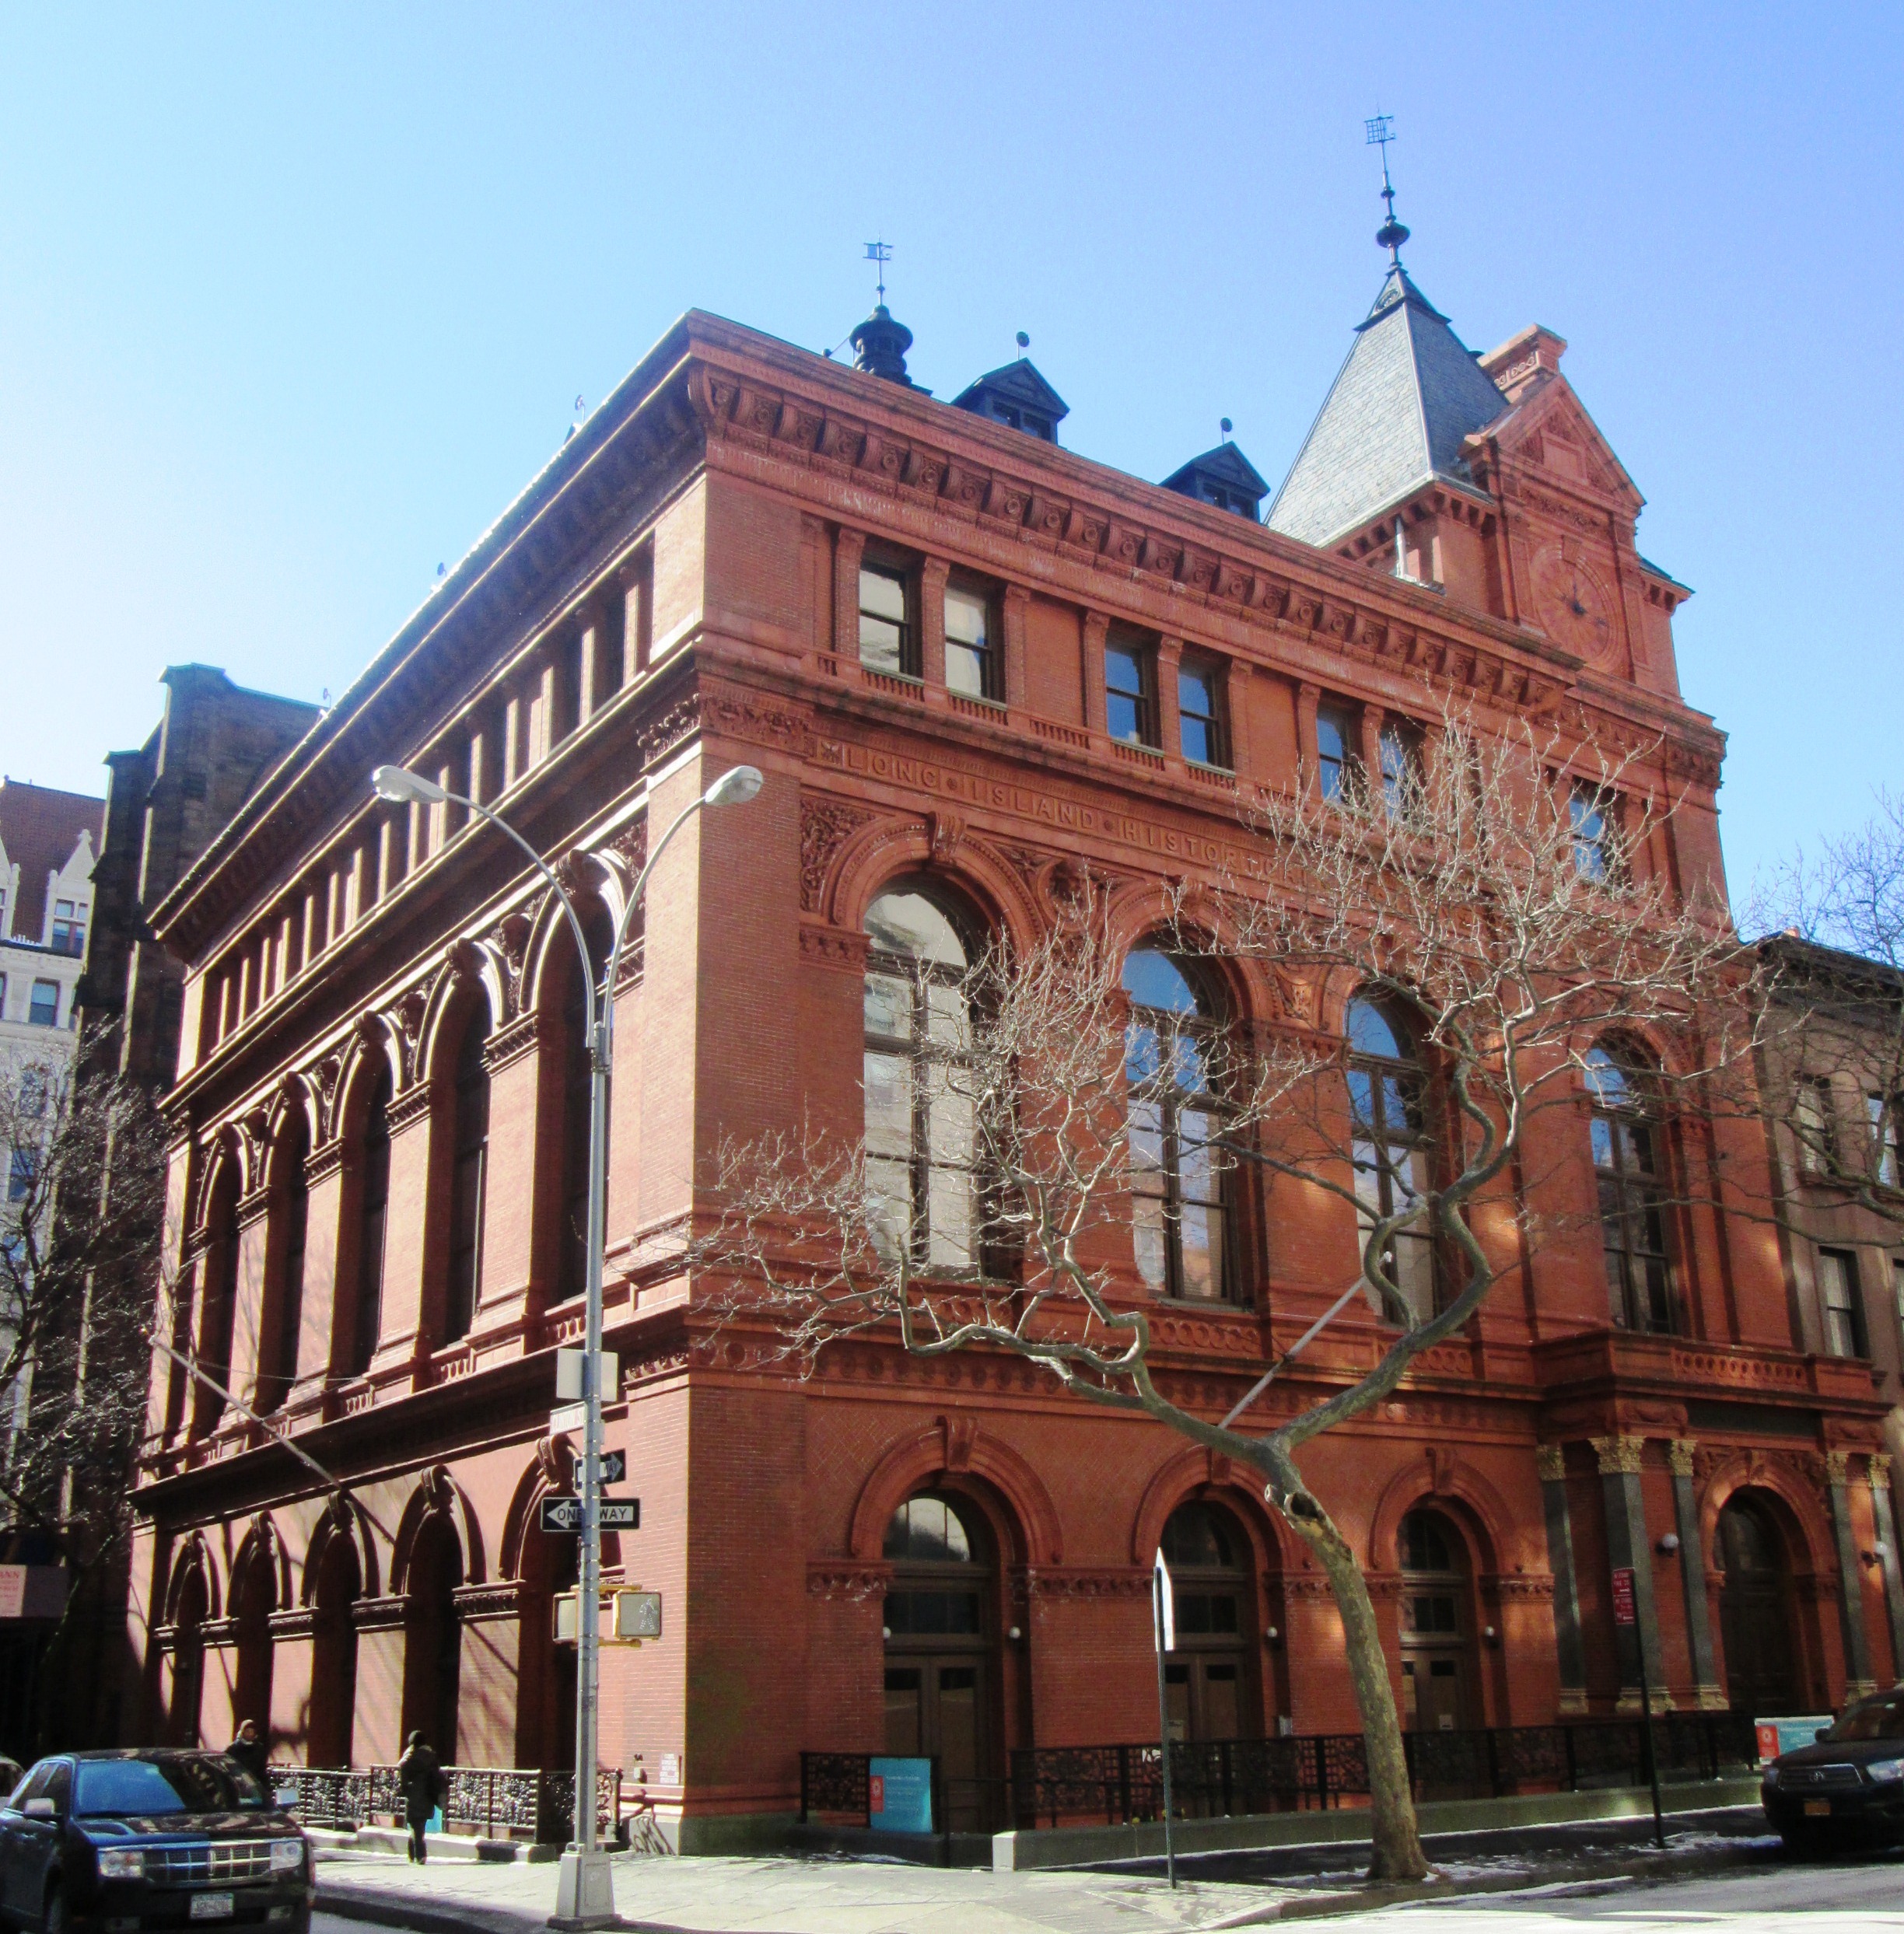 The Brooklyn Historical Society